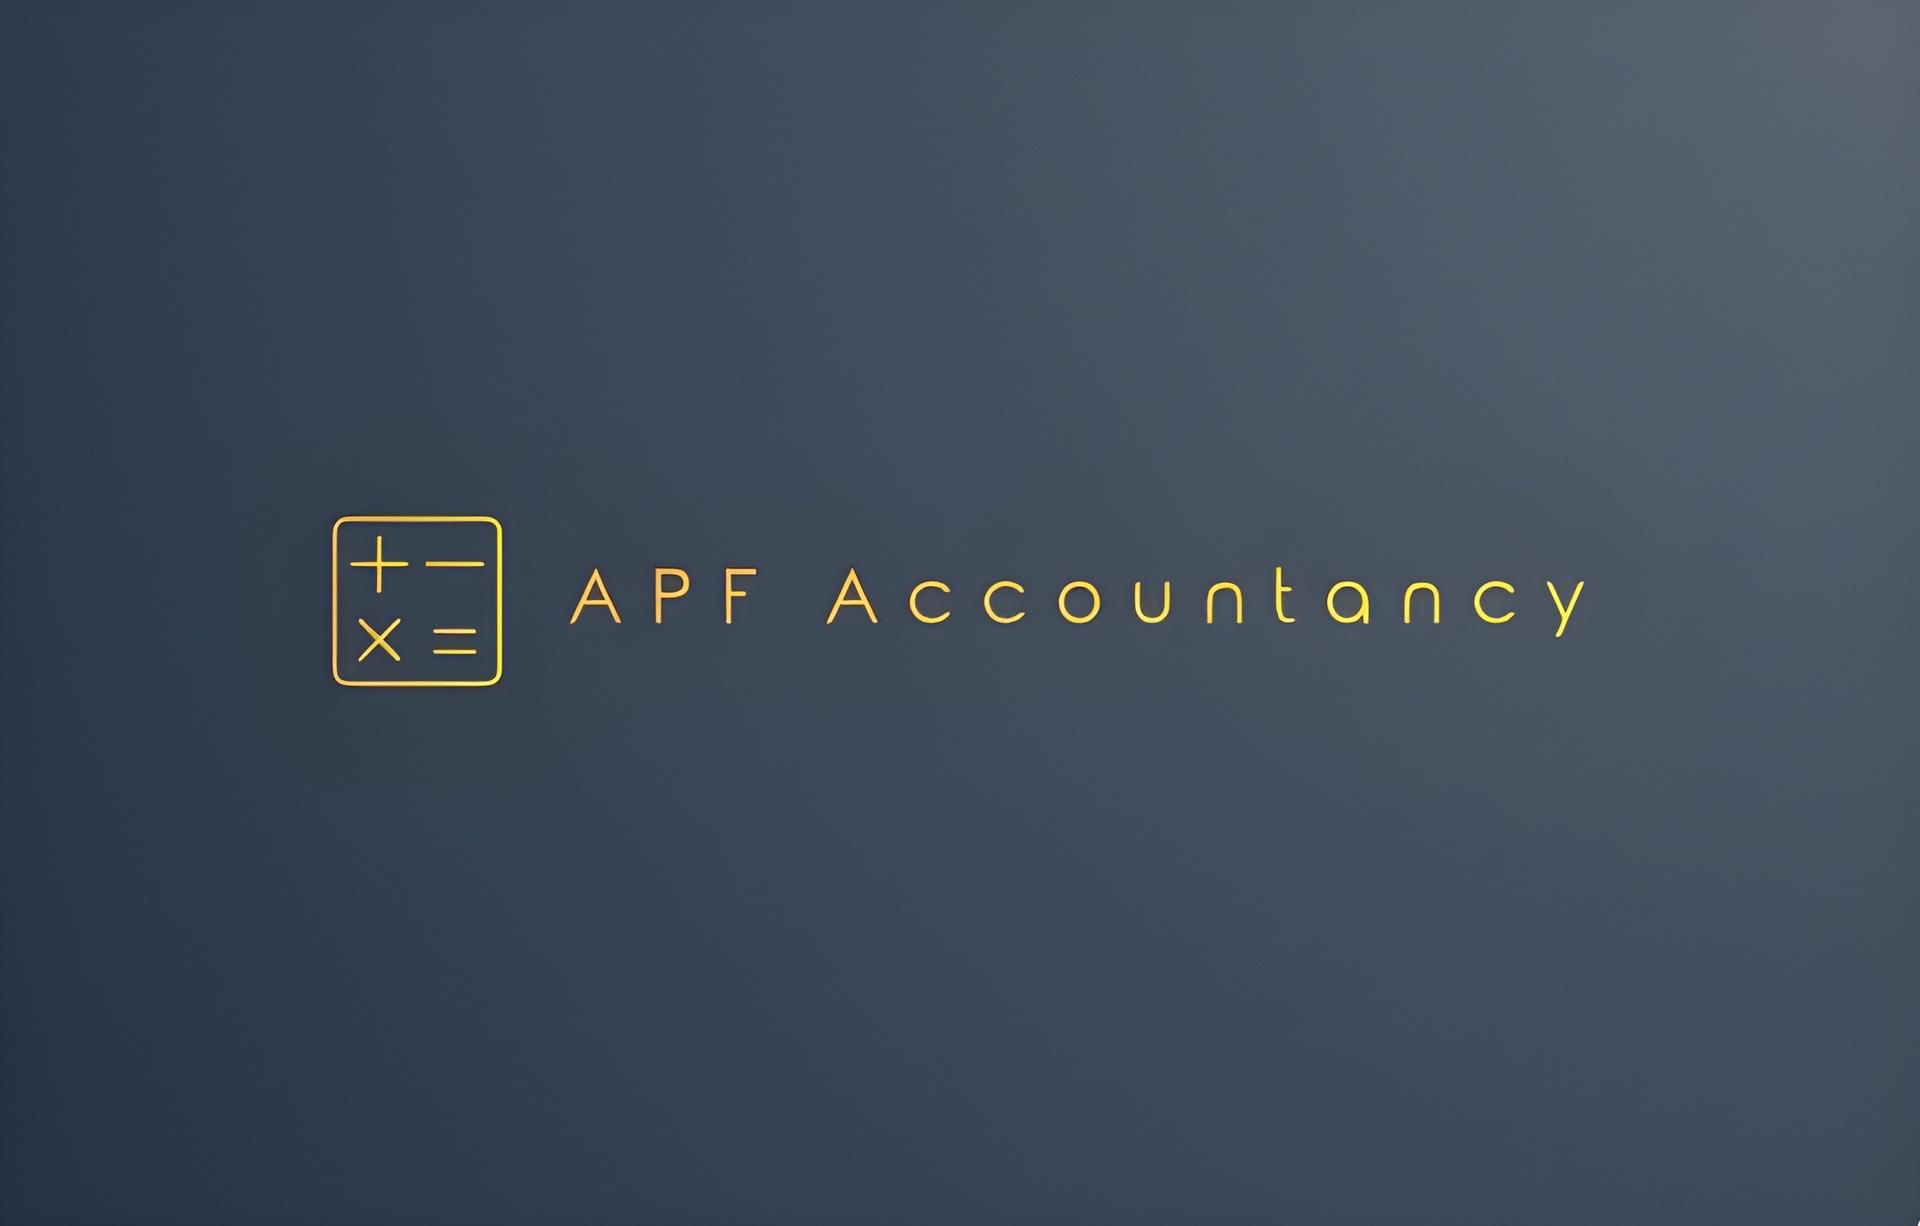 APF Accountancy, Alexis Petitfrère